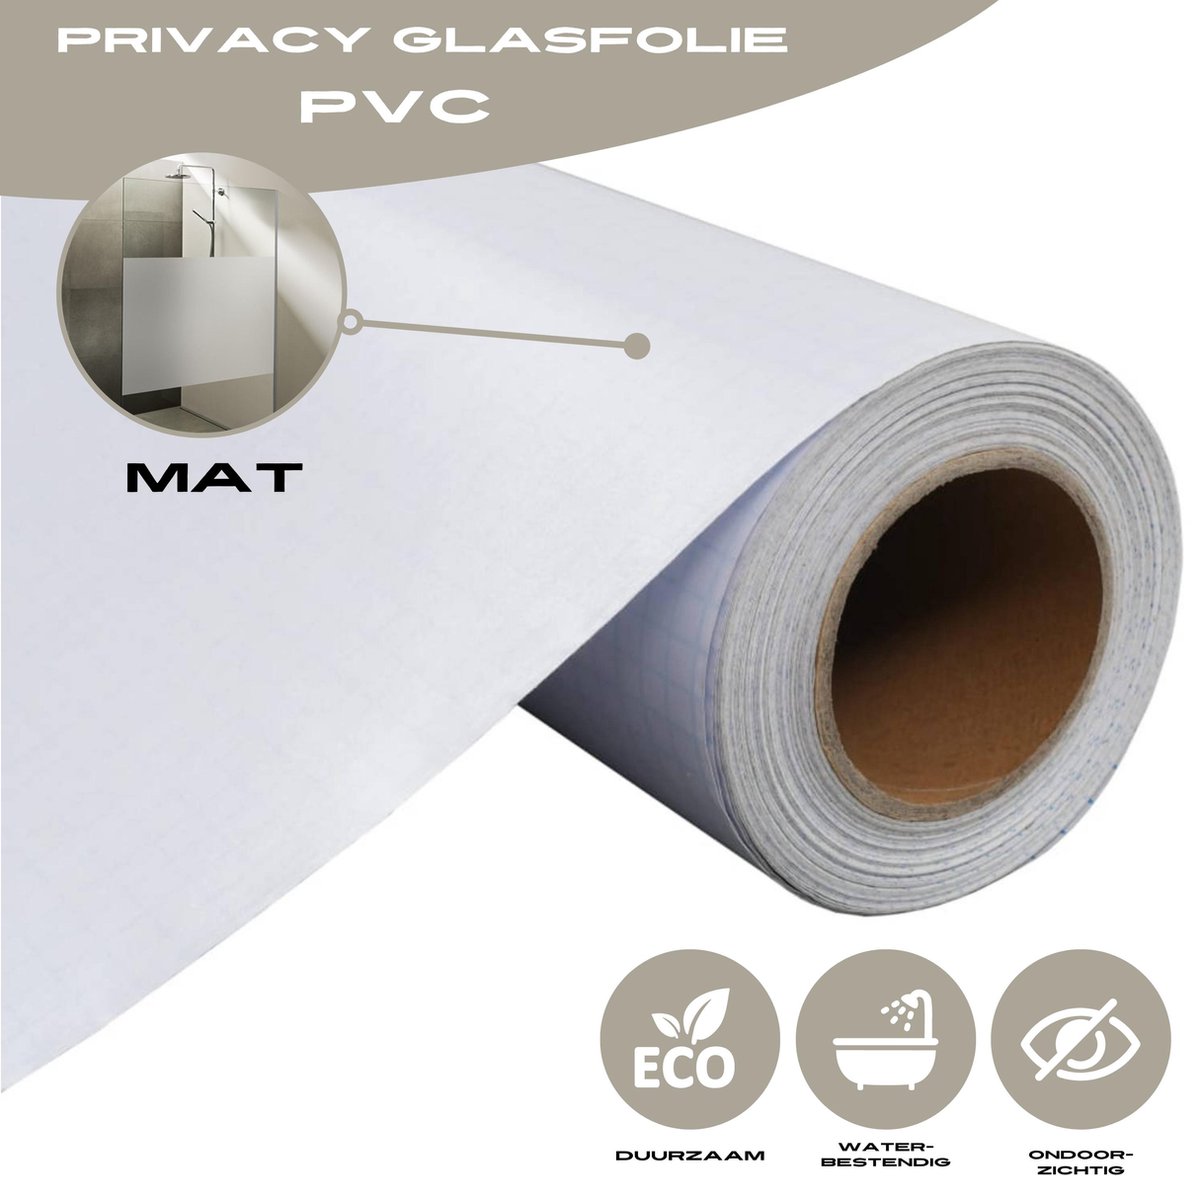 Privacyfolie - UV werend - werkt isolerend - zelfklevend - mat - melkglas - duurzaam - isolatie - folie - raamfolie - inkijkwerend - ondoorzichtig wit - matglas - badkamerfolie - badkamer - huiskamer - keuken - slaapkamer - glasfolie - 0,9 m x 20 m